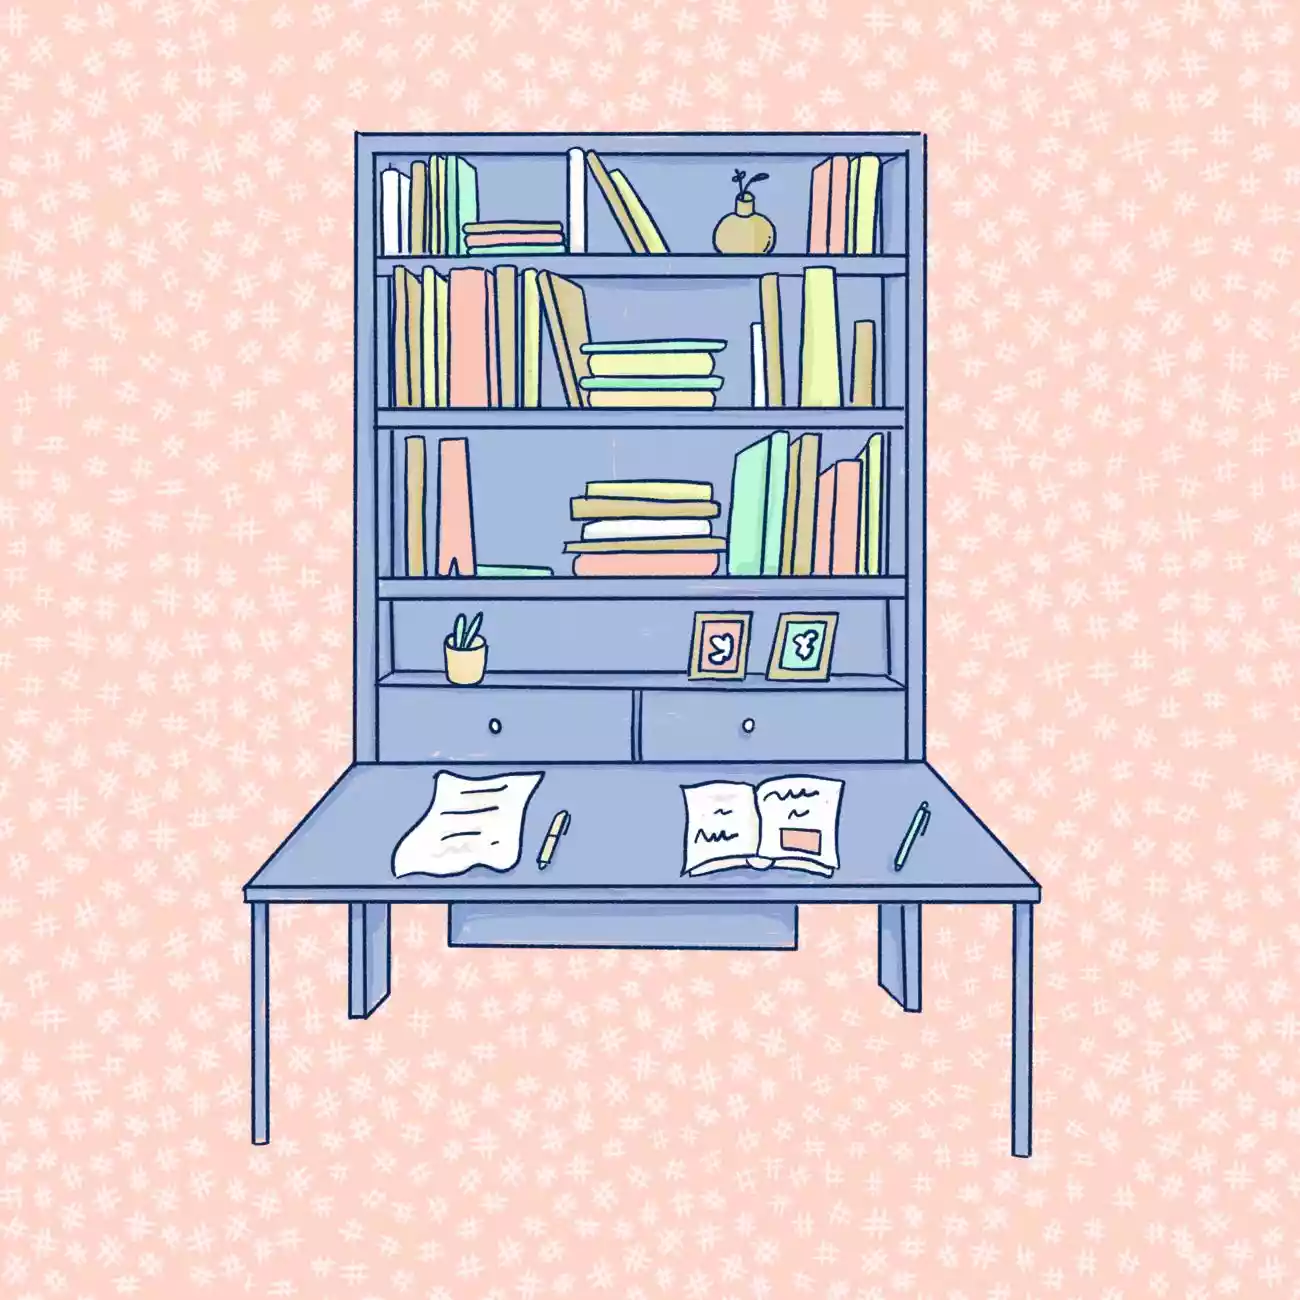 Bookshelf Desk